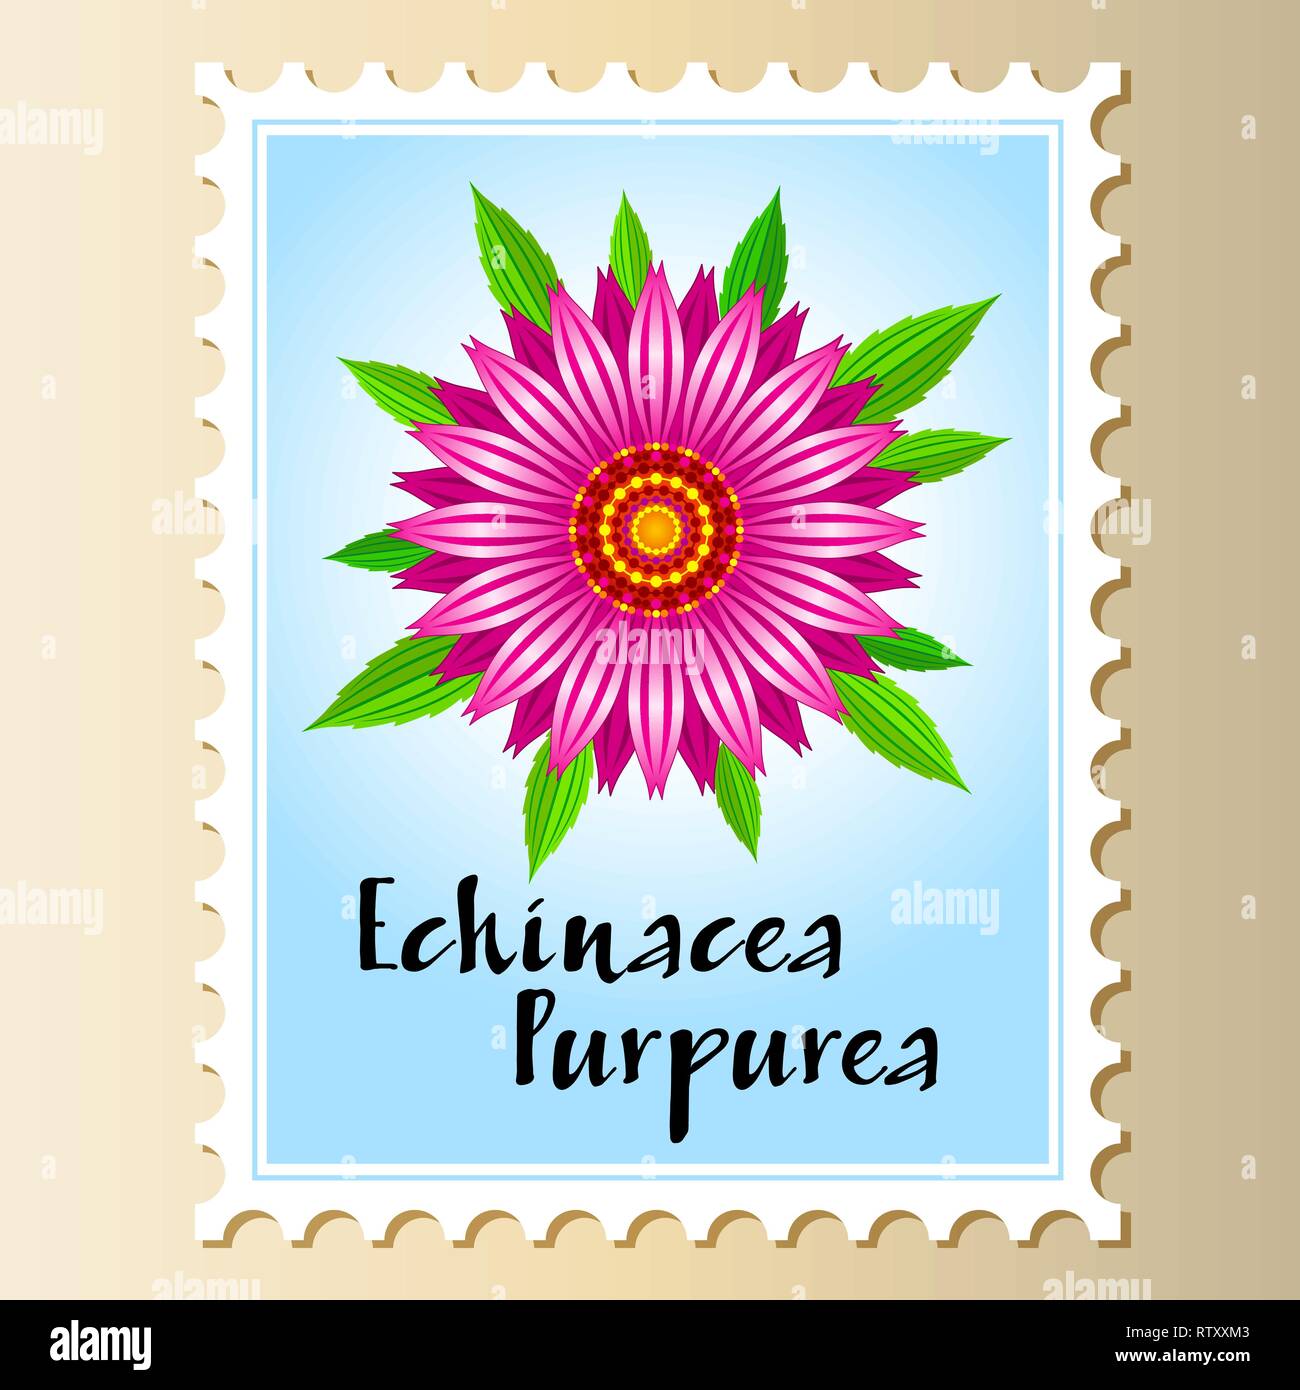 Echinacea purpurea Vektor Blume auf einer Briefmarke. Stock Vektor